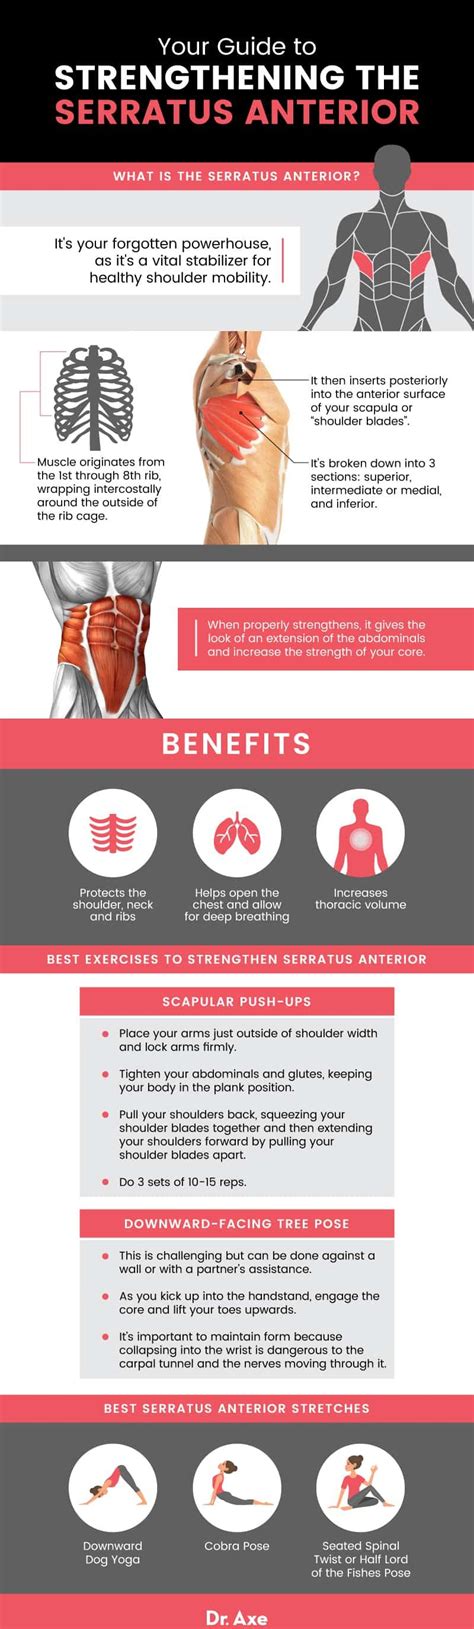 Serratus Anterior Exercises To Strengthen The Top Of Your Abs Dr Axe